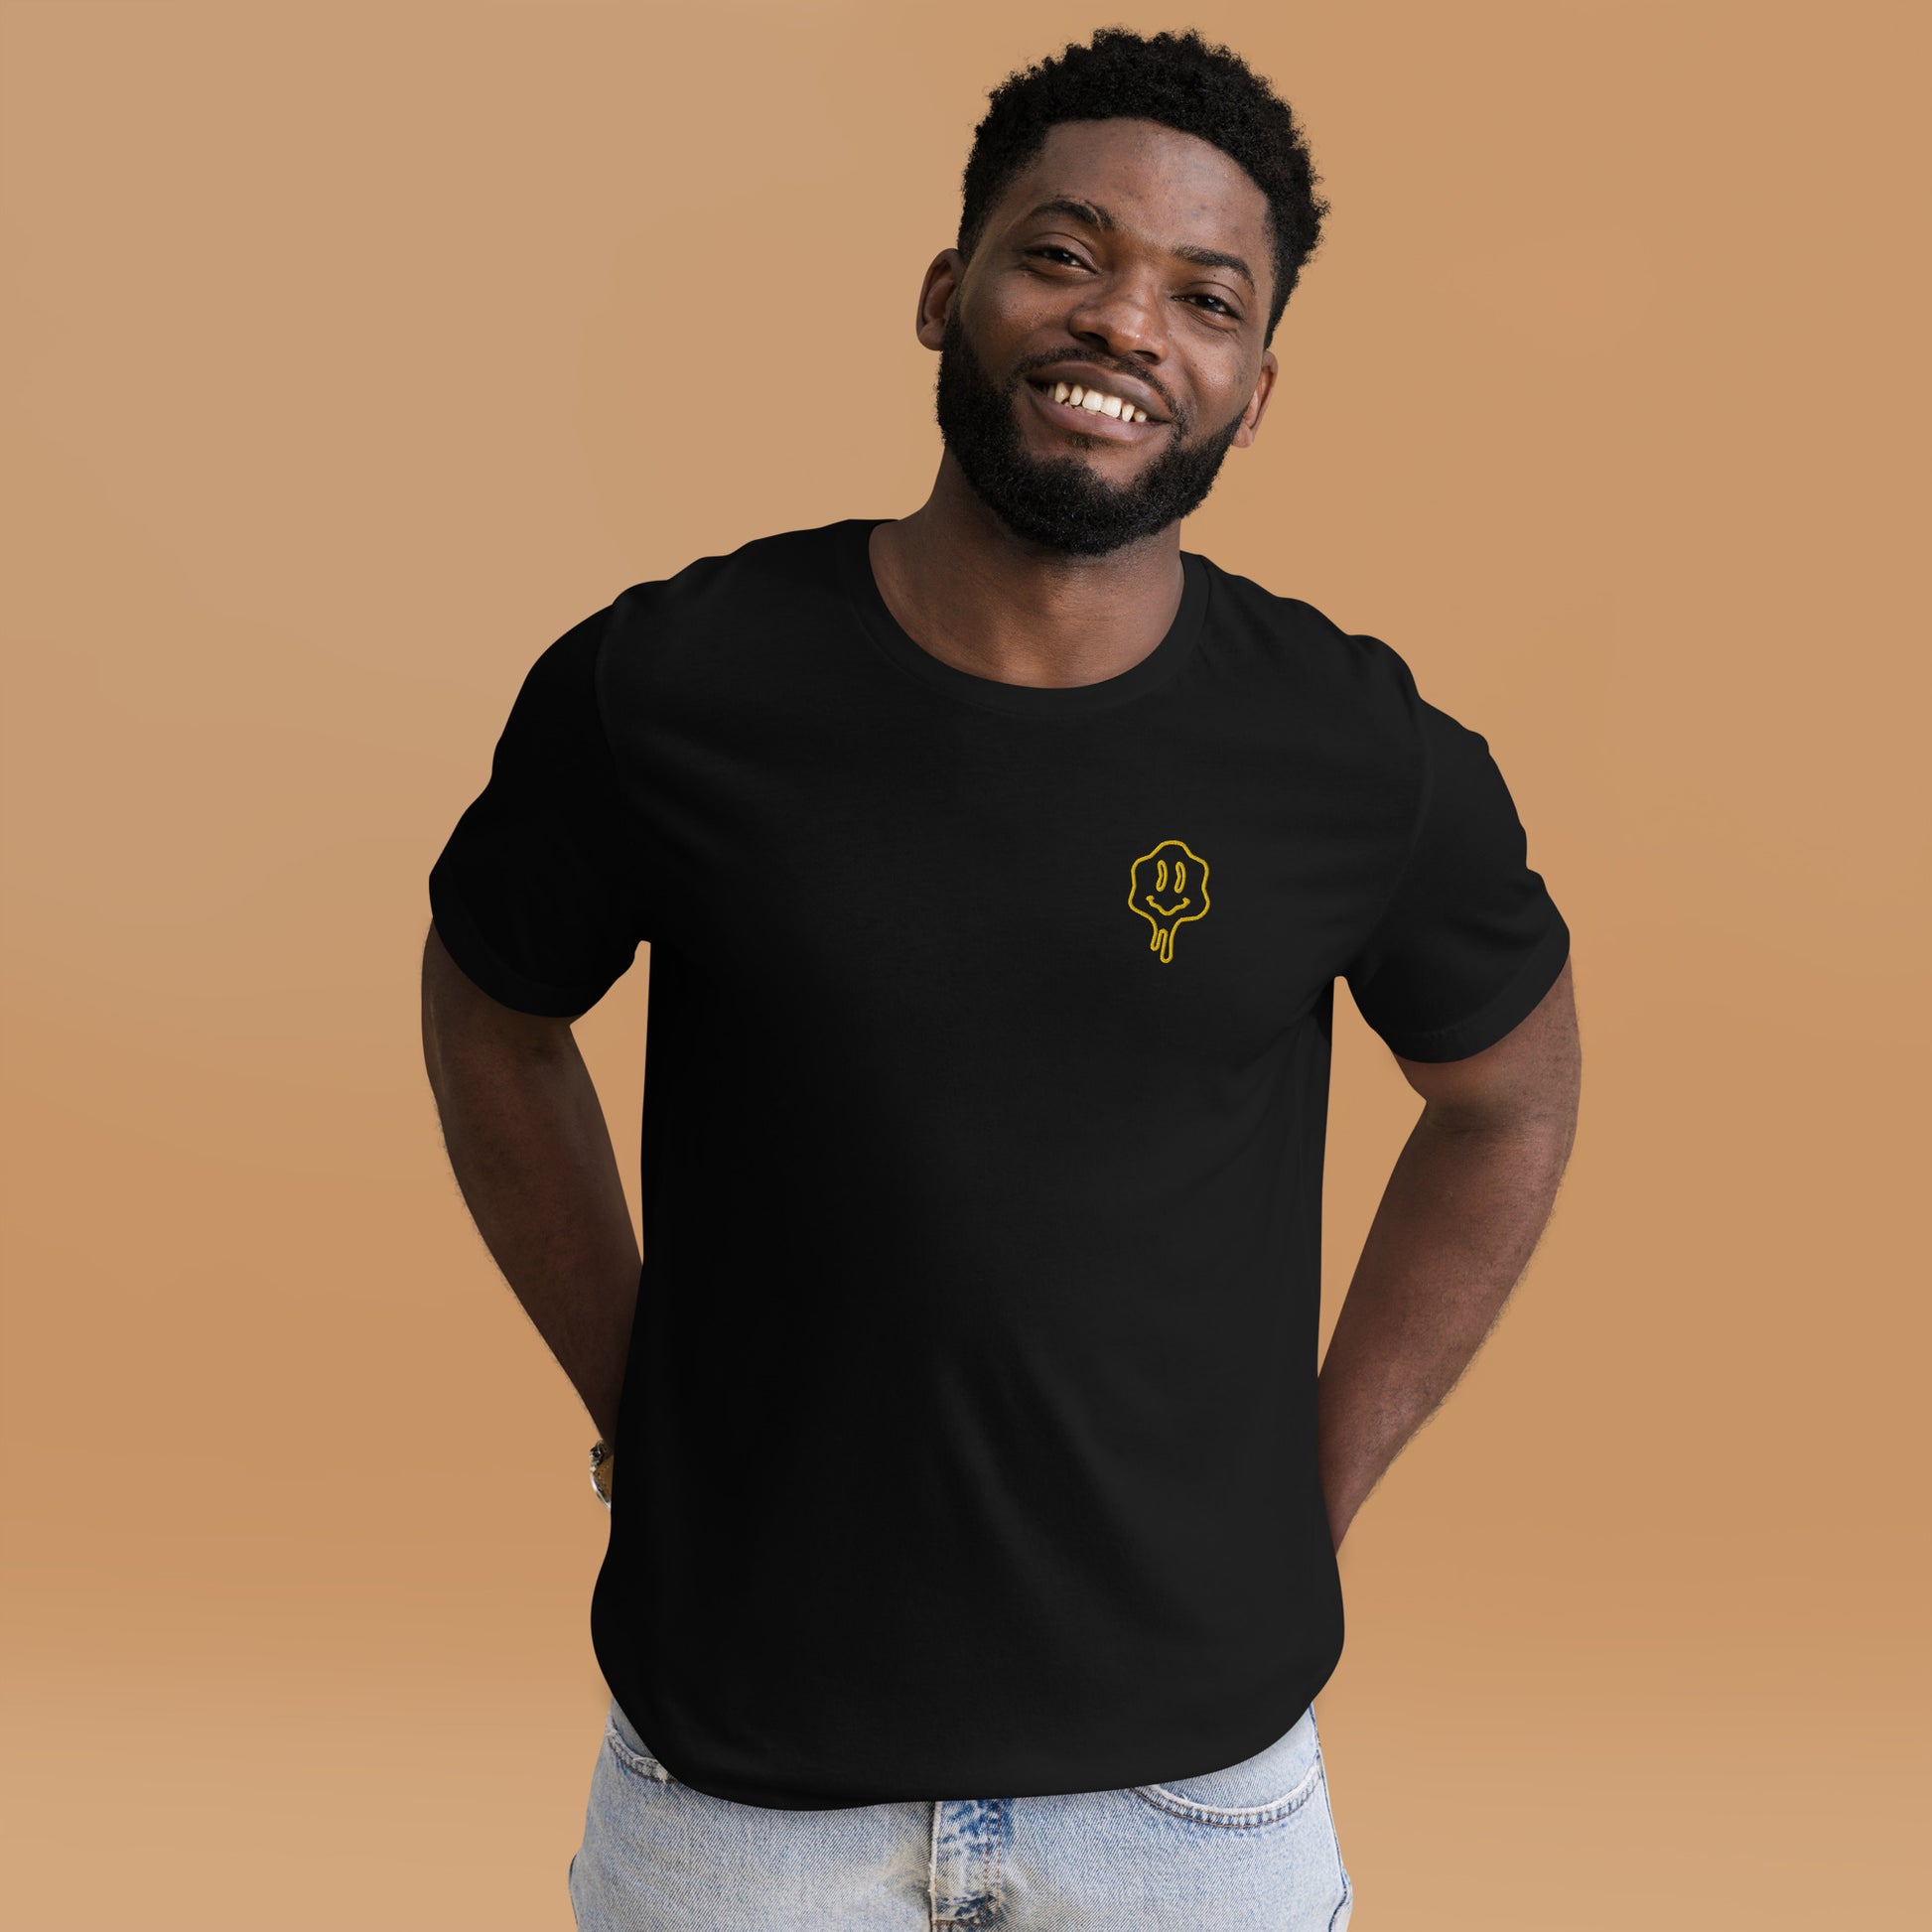 Man wearing NOMADA Melting Smiley Face embroidered T-shirt, Black color shirt